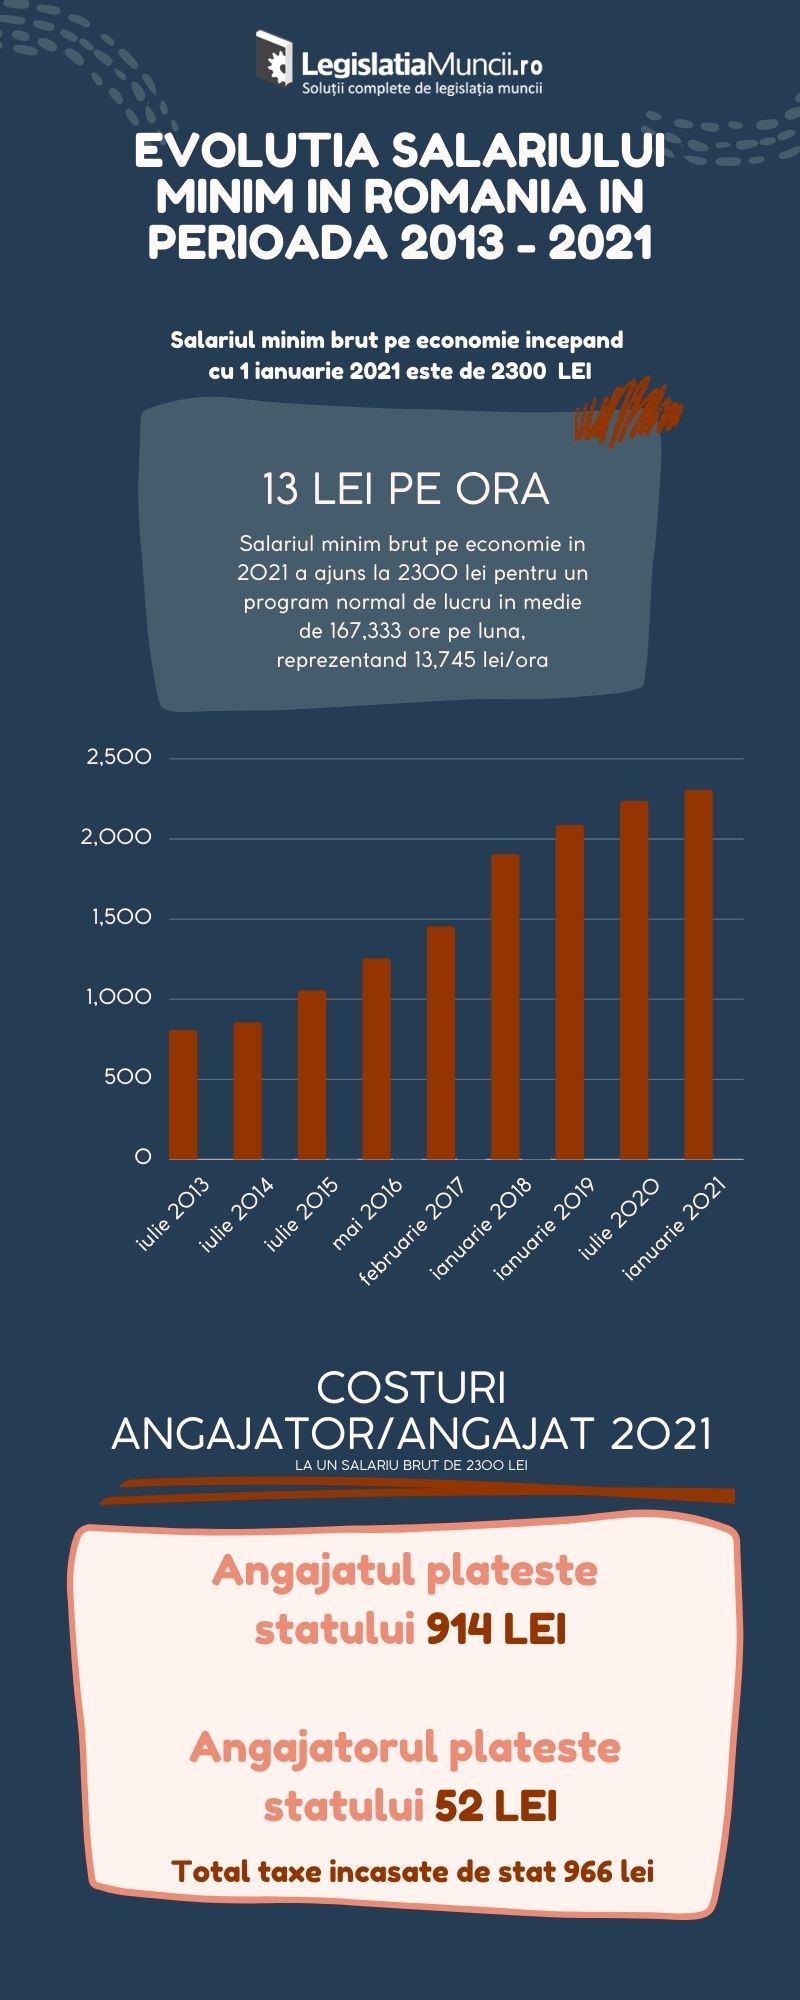 Evolutia salariului minim in Romania in perioada 2013-2021